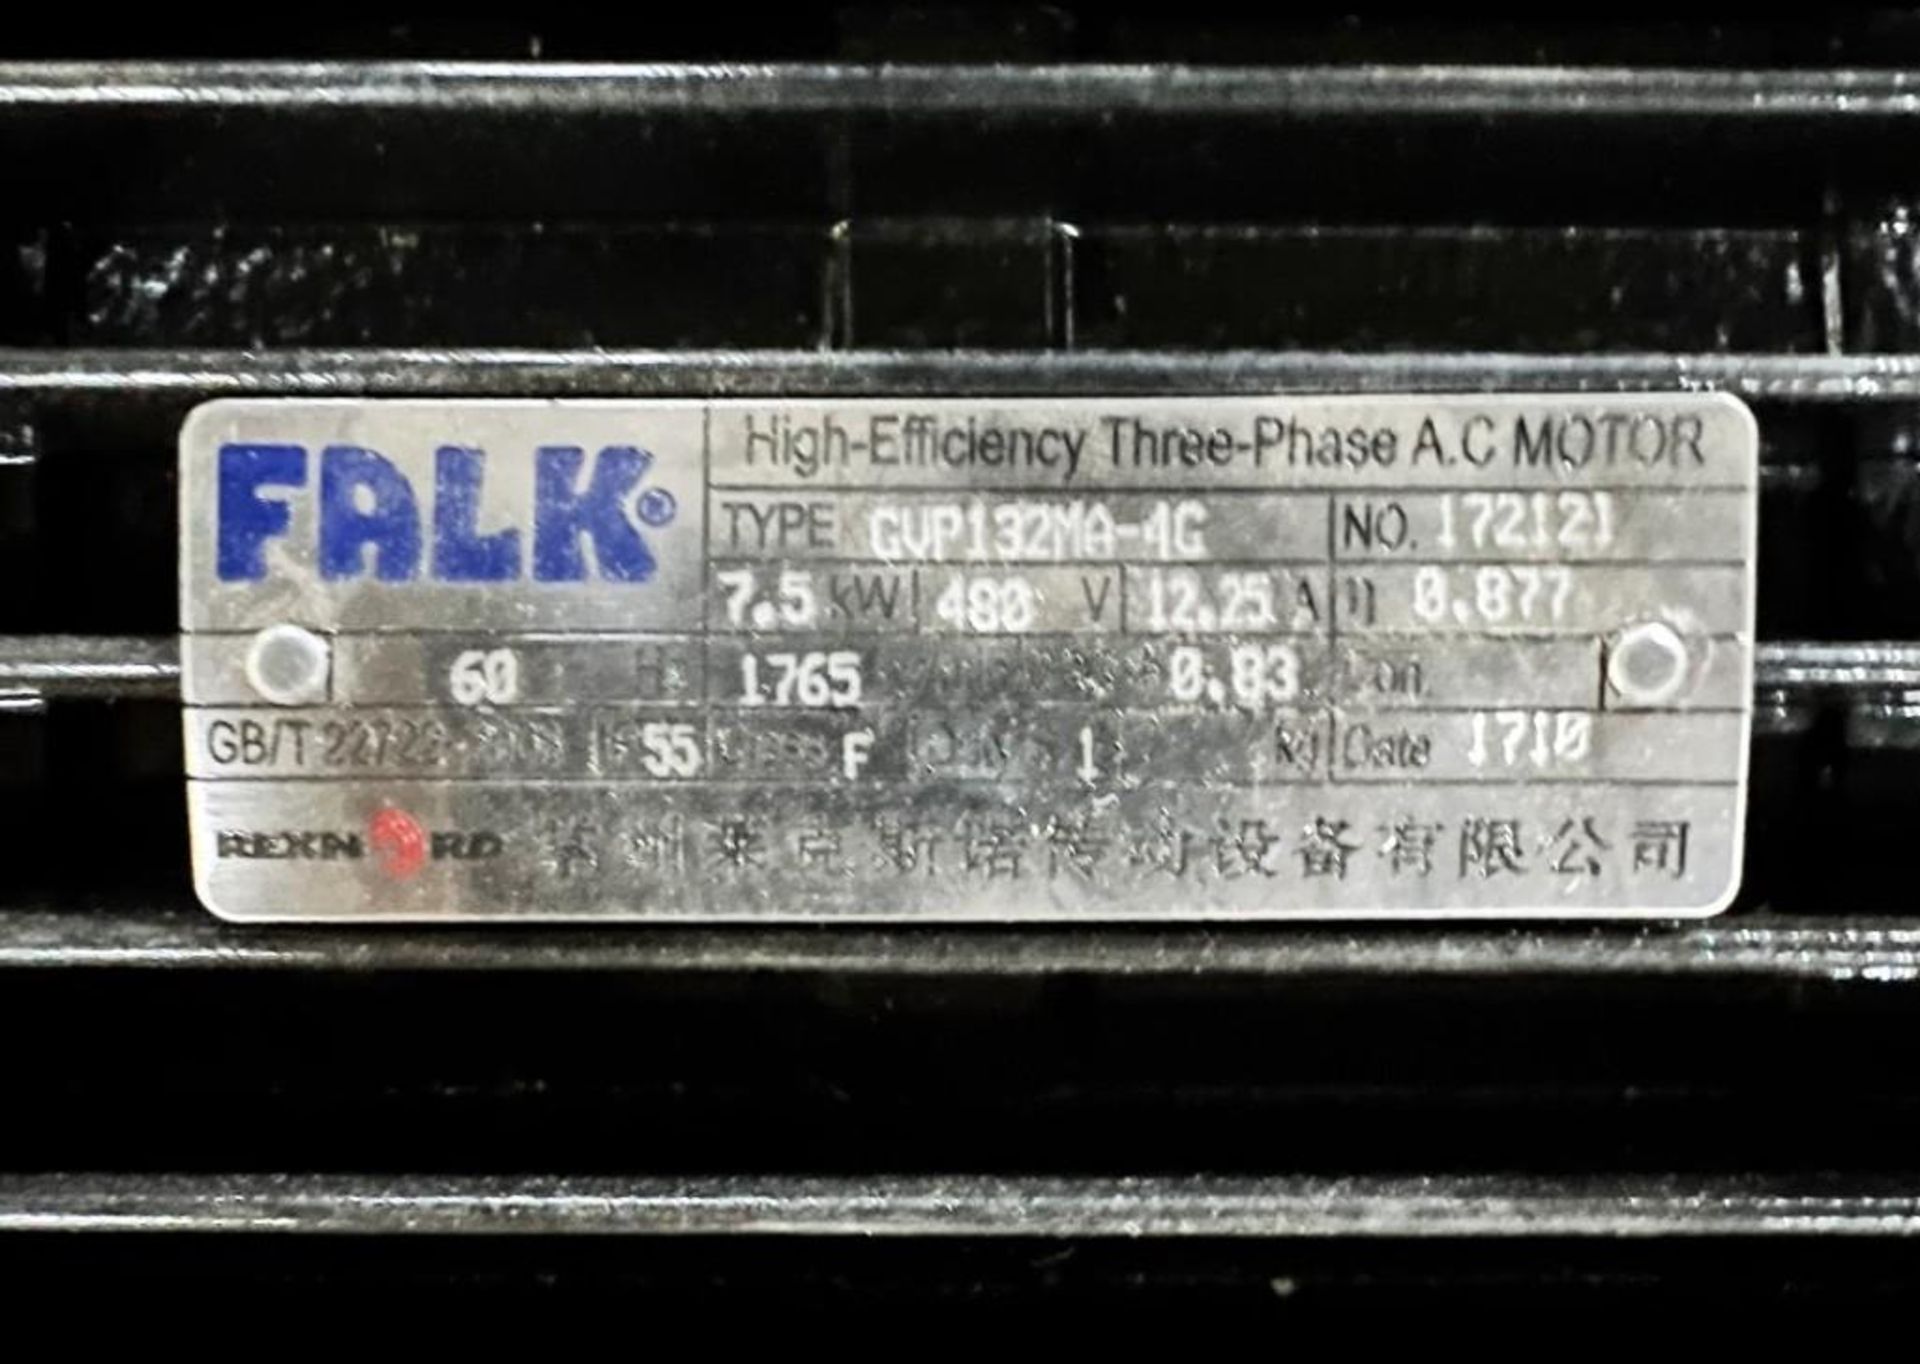 Falk 3 Phase AC 7.5KW Gear Motor. Type GVP132MA-4G, 60hz, 480 volt, 1765 rpm. - Image 5 of 6